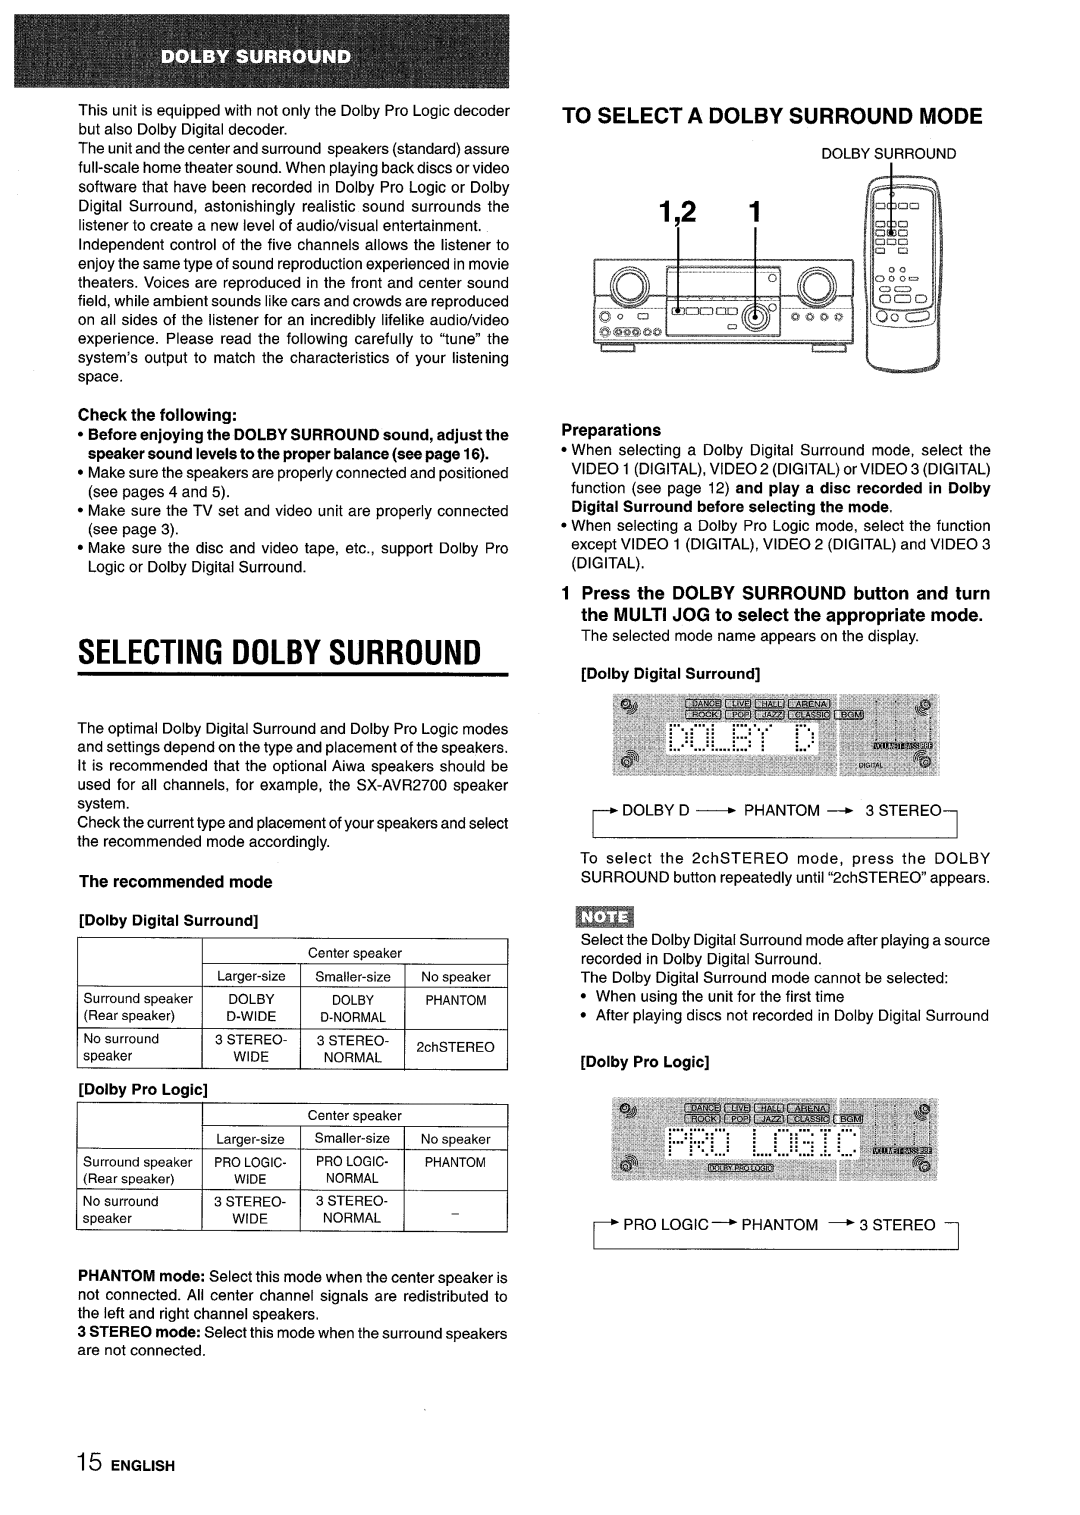 Sony AV-DV75 Selecting Dolby Surround, To Select A Dolby Surround Mode, Check the following, Dolby Pro Logic, Preparations 